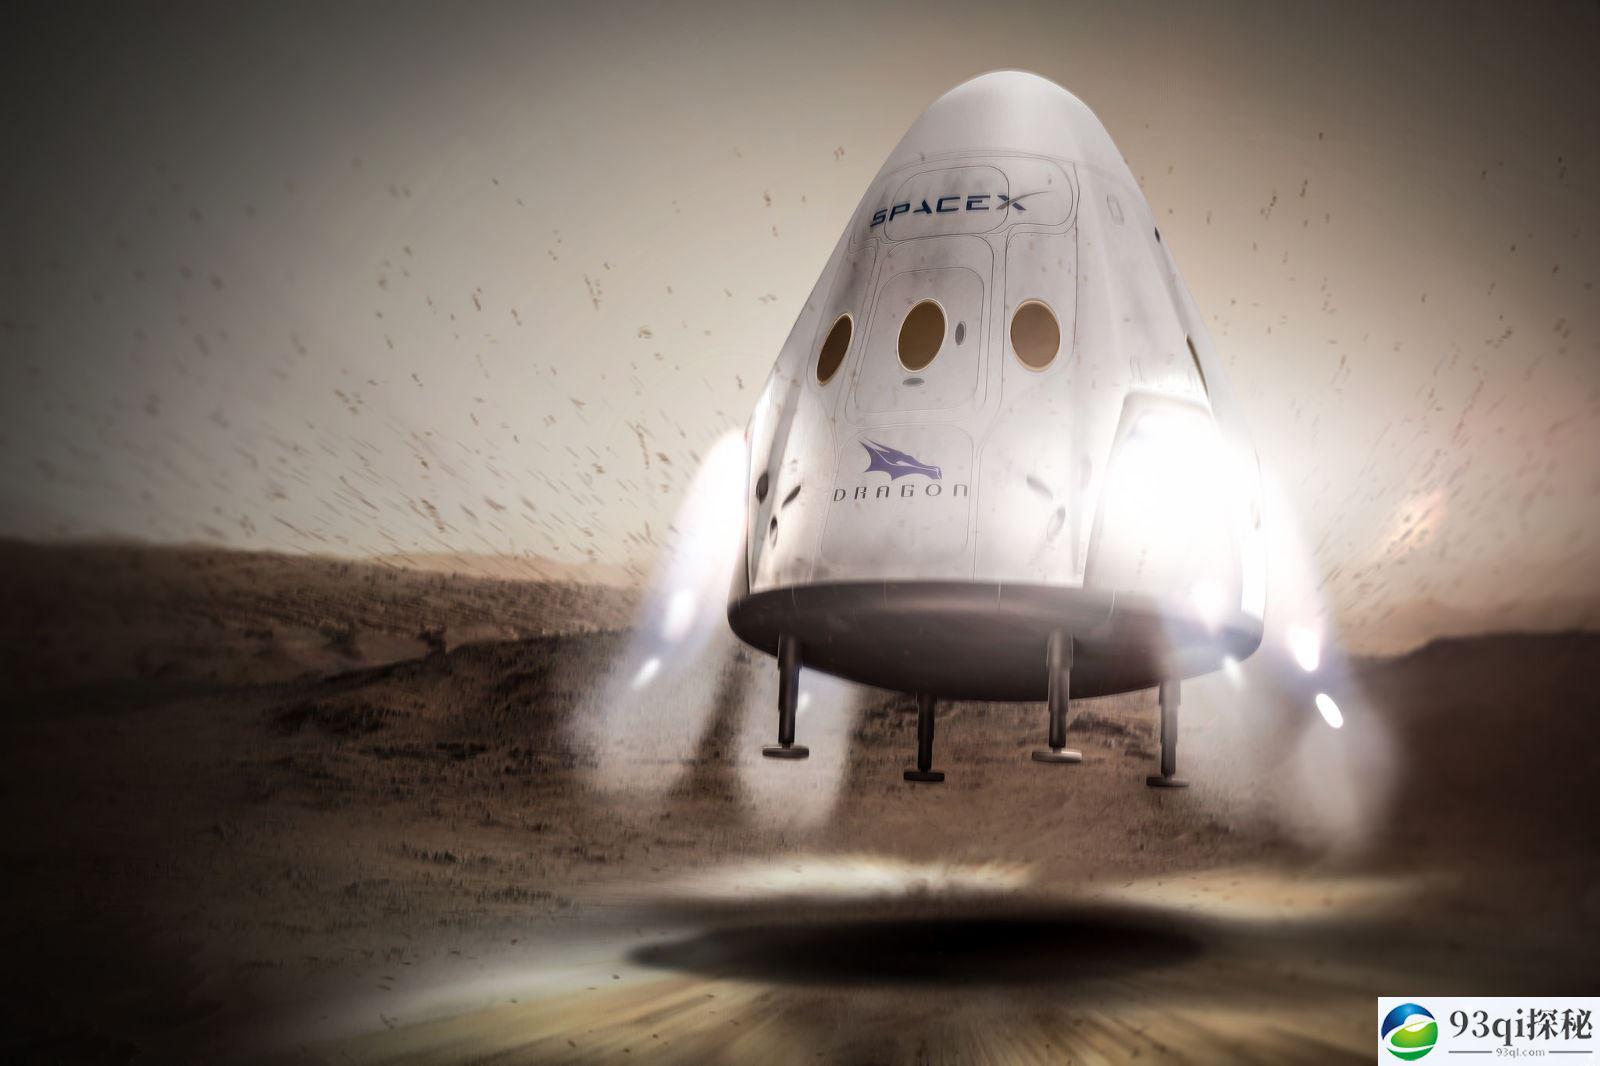 SpaceX 将 Red Dragon 无人火星任务延后至 2020 年